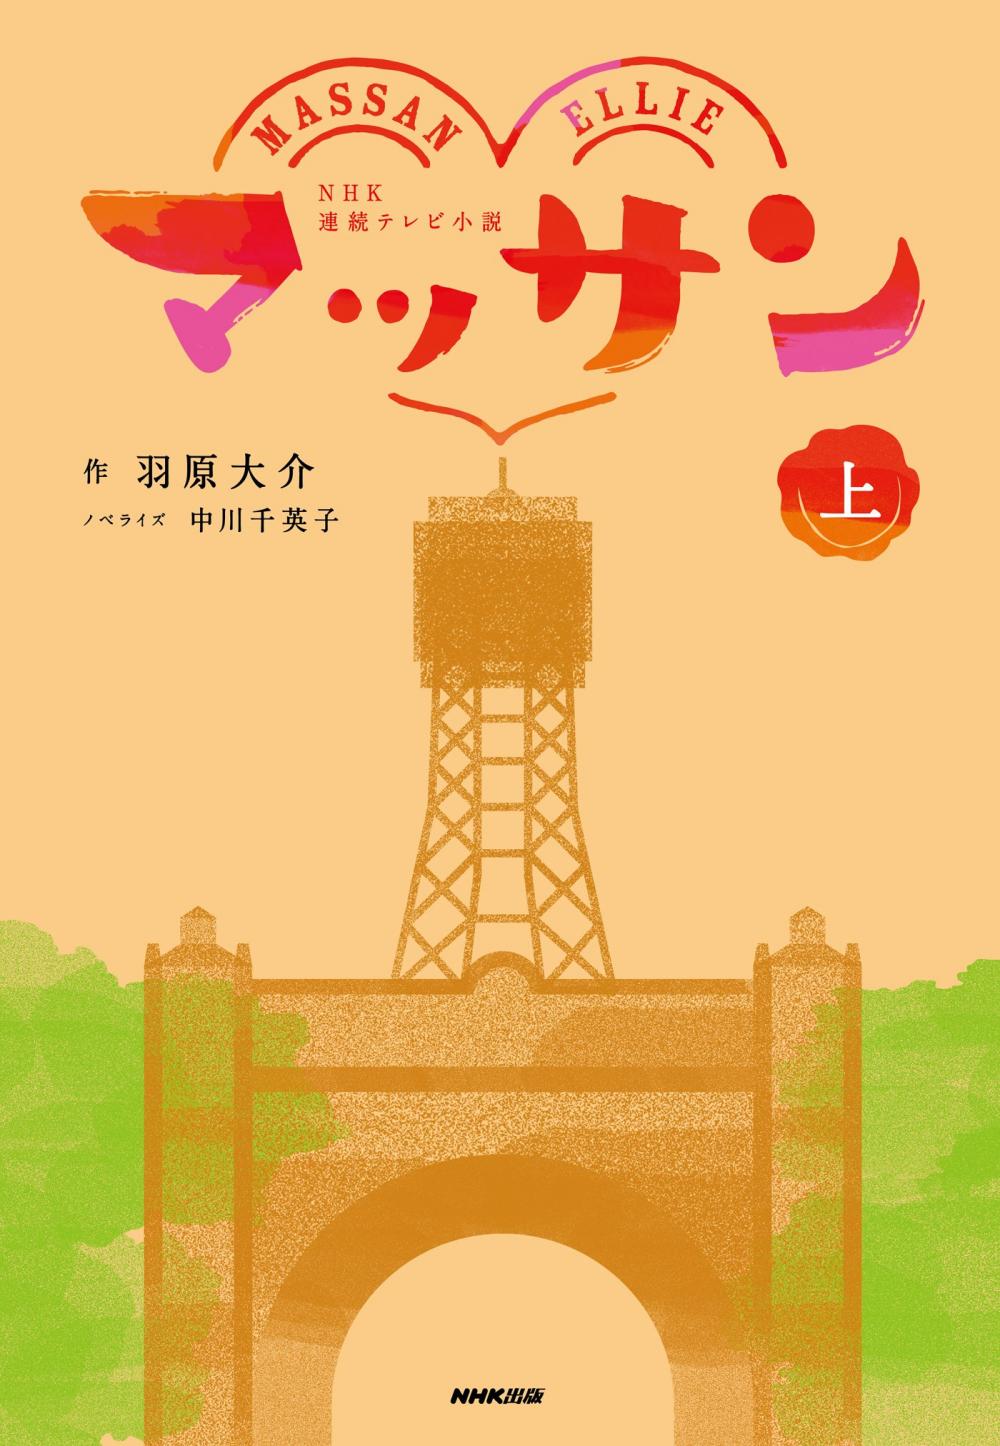 NHK連続テレビ小説 マッサン 上